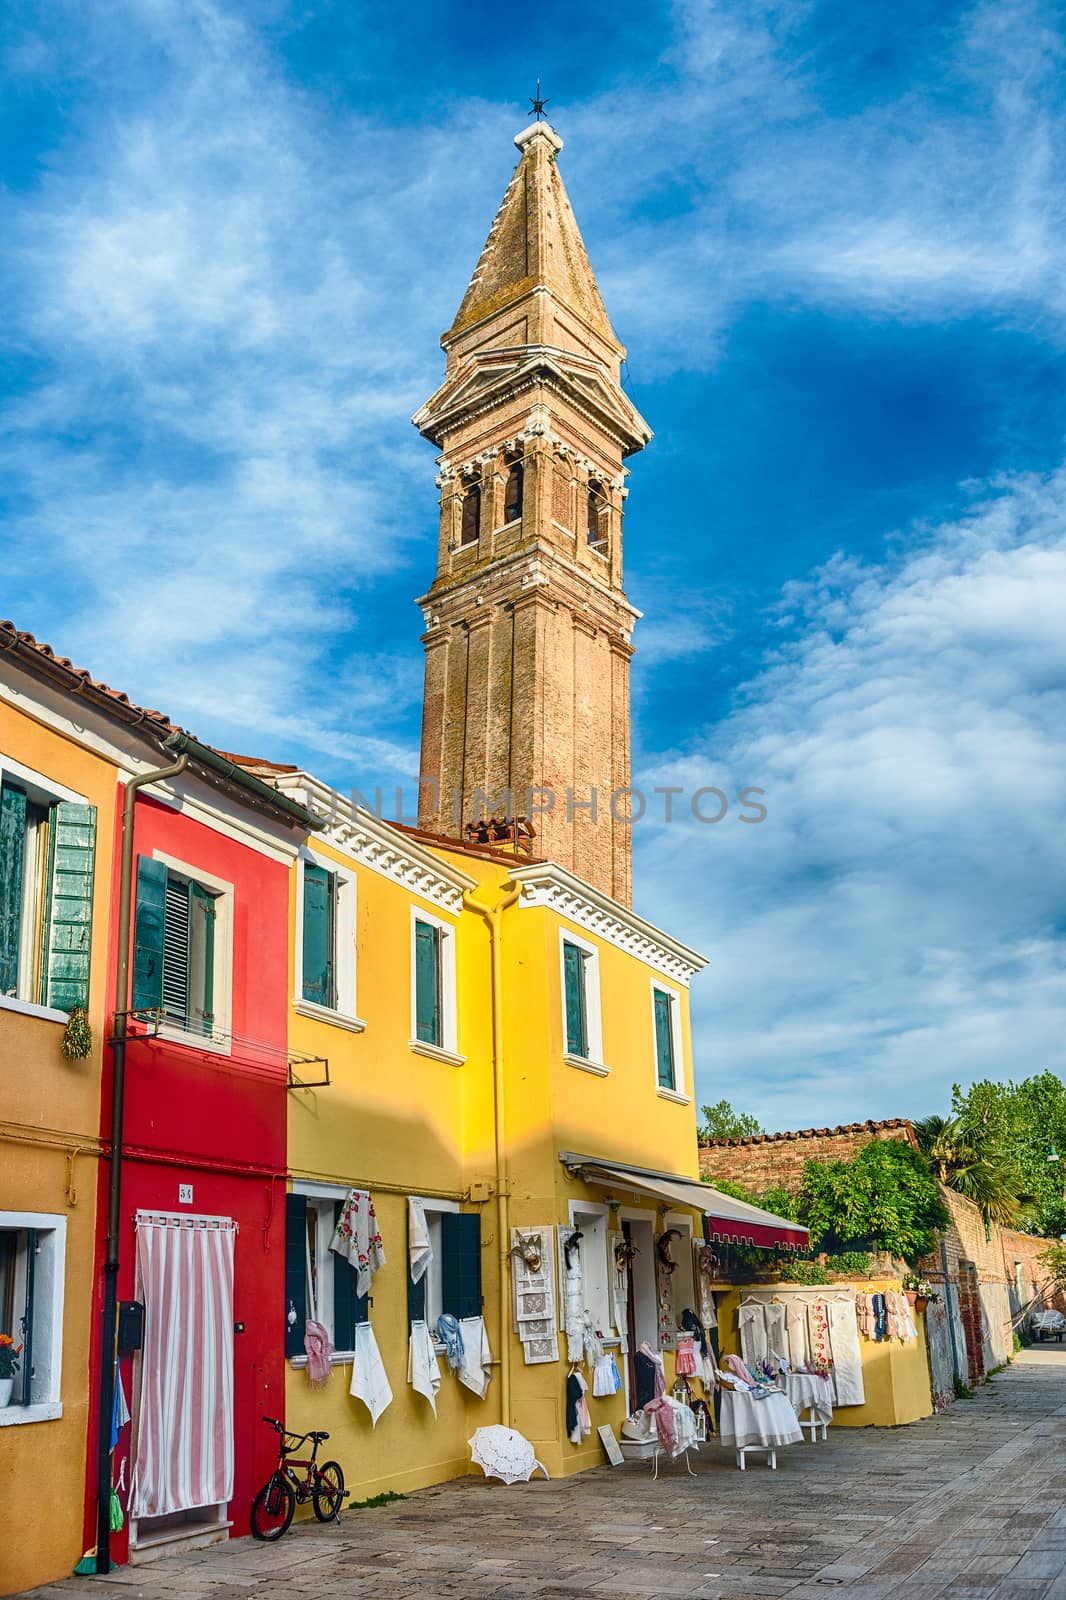 The leaning belltower of St Martin Church, Burano, Venice, Italy by marcorubino